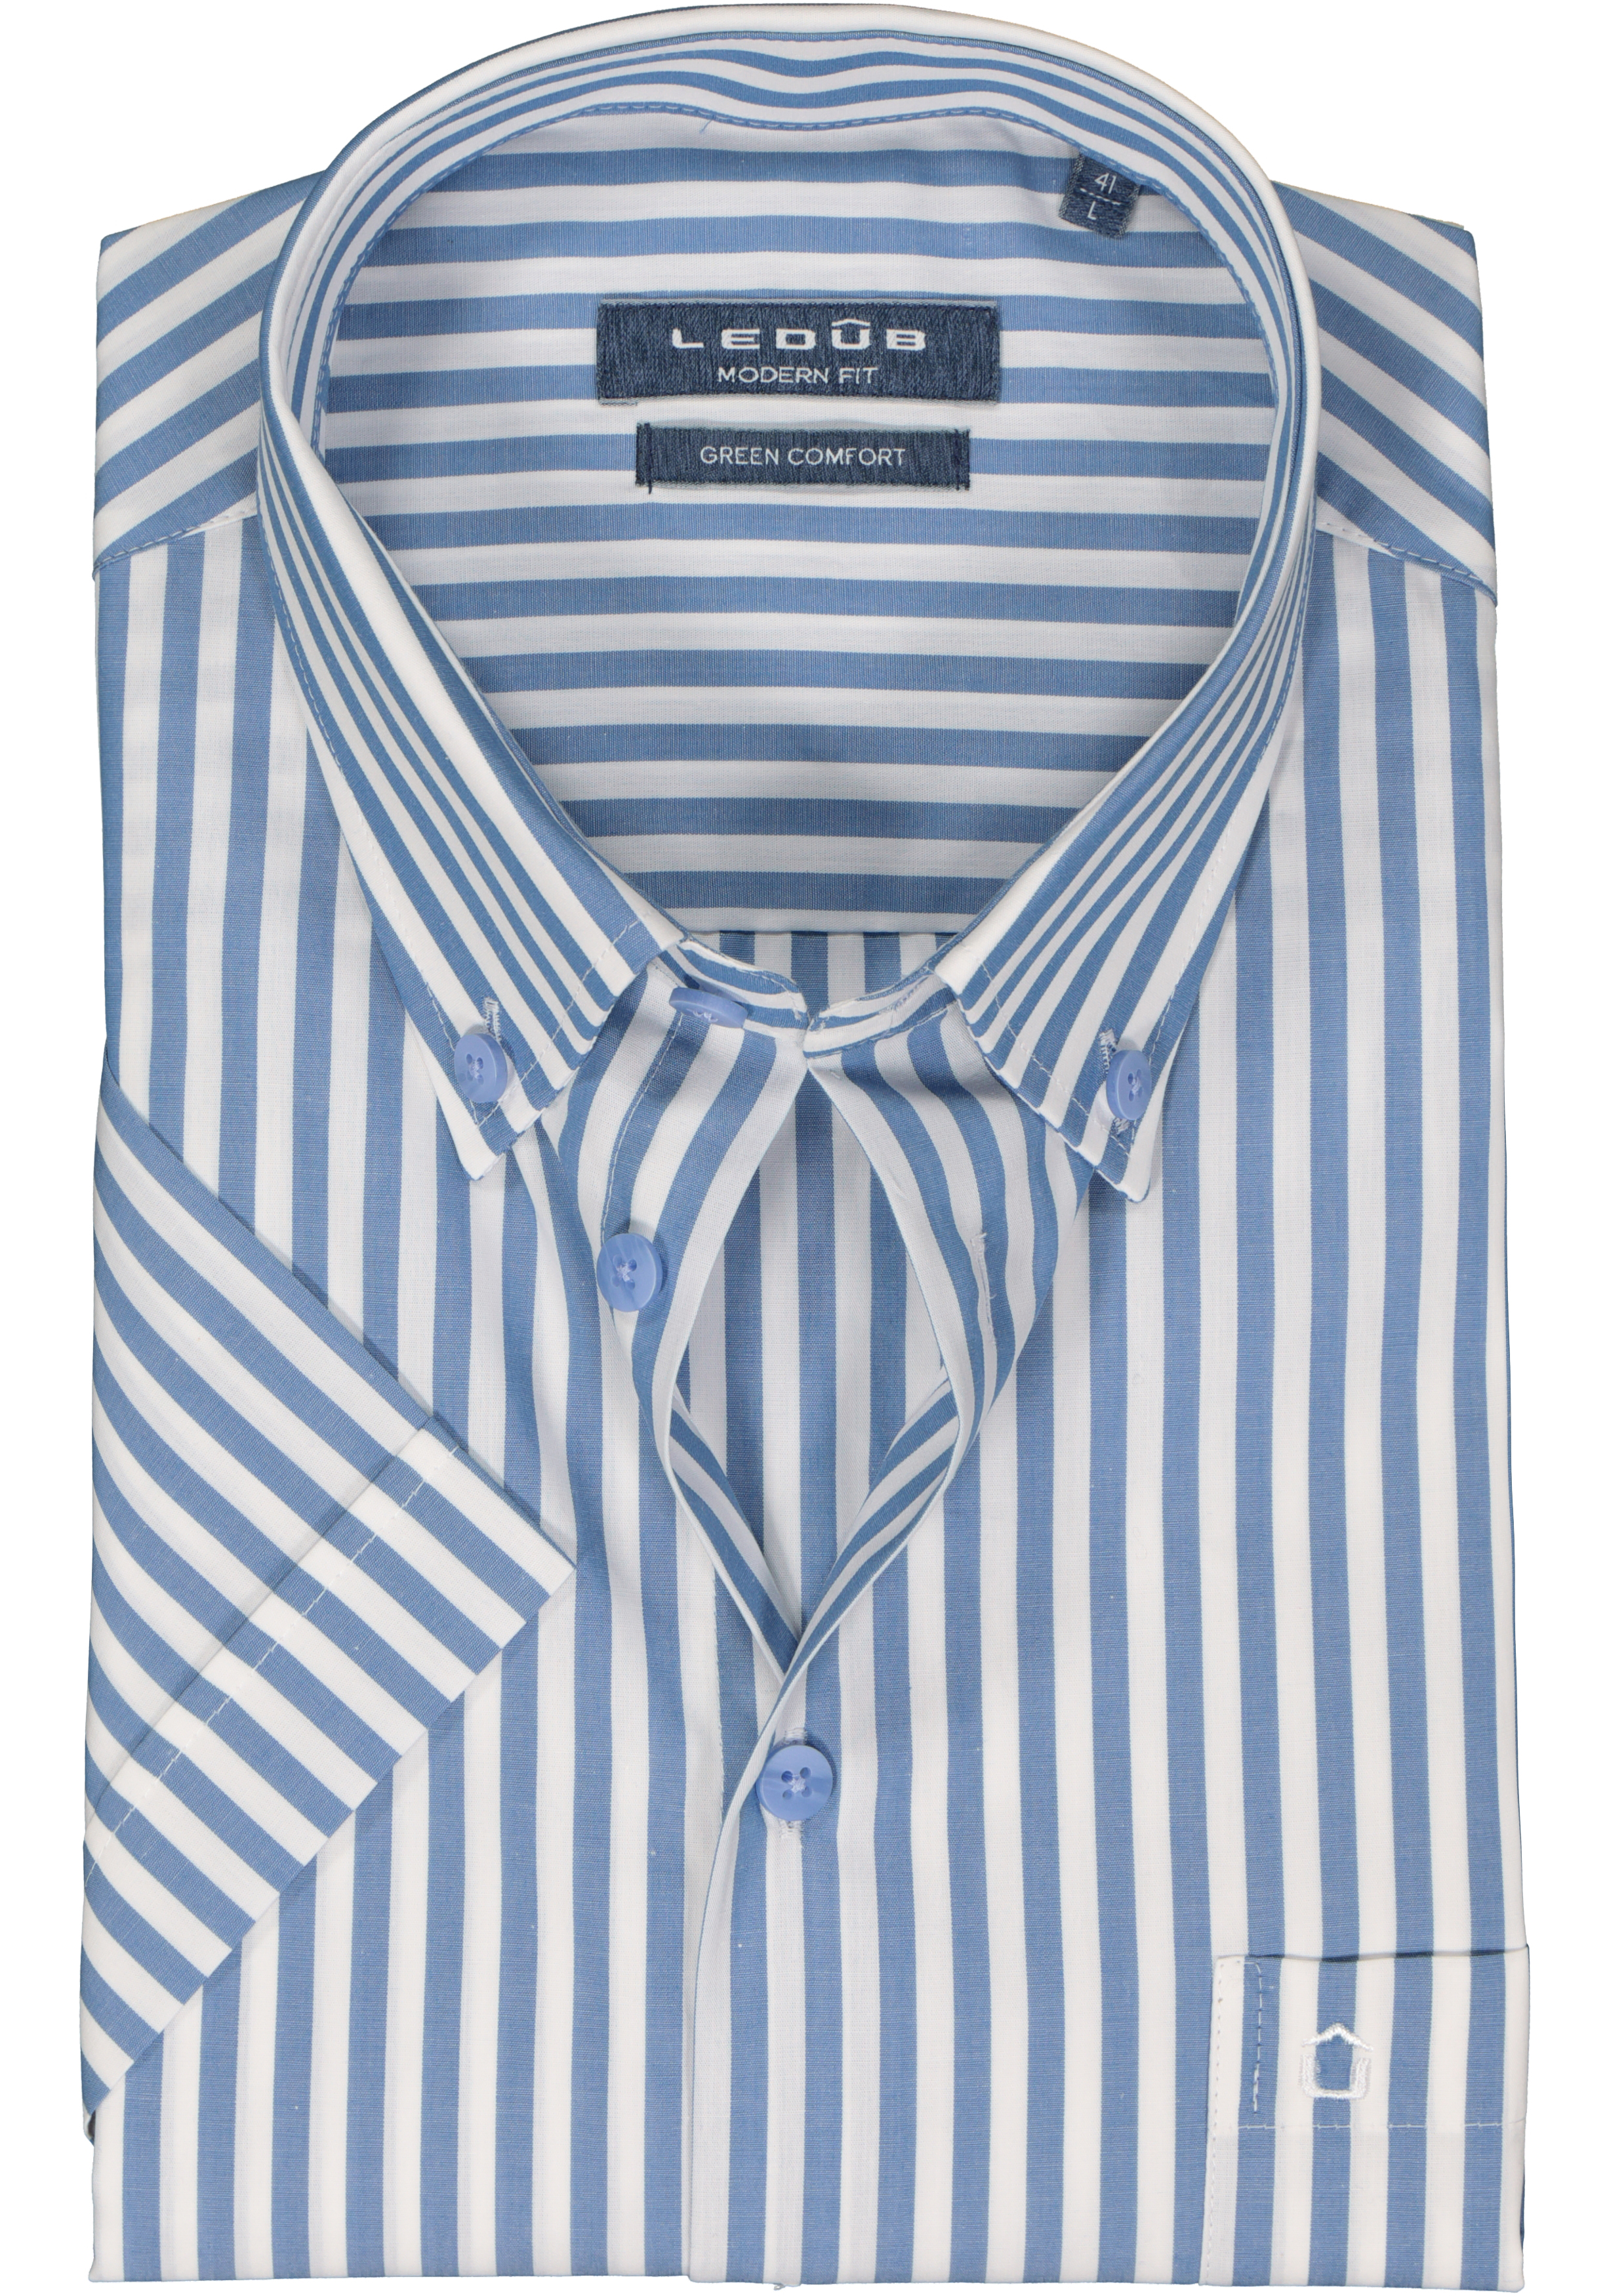 Ledub modern fit overhemd, korte mouw, popeline, middenblauw met wit gestreept